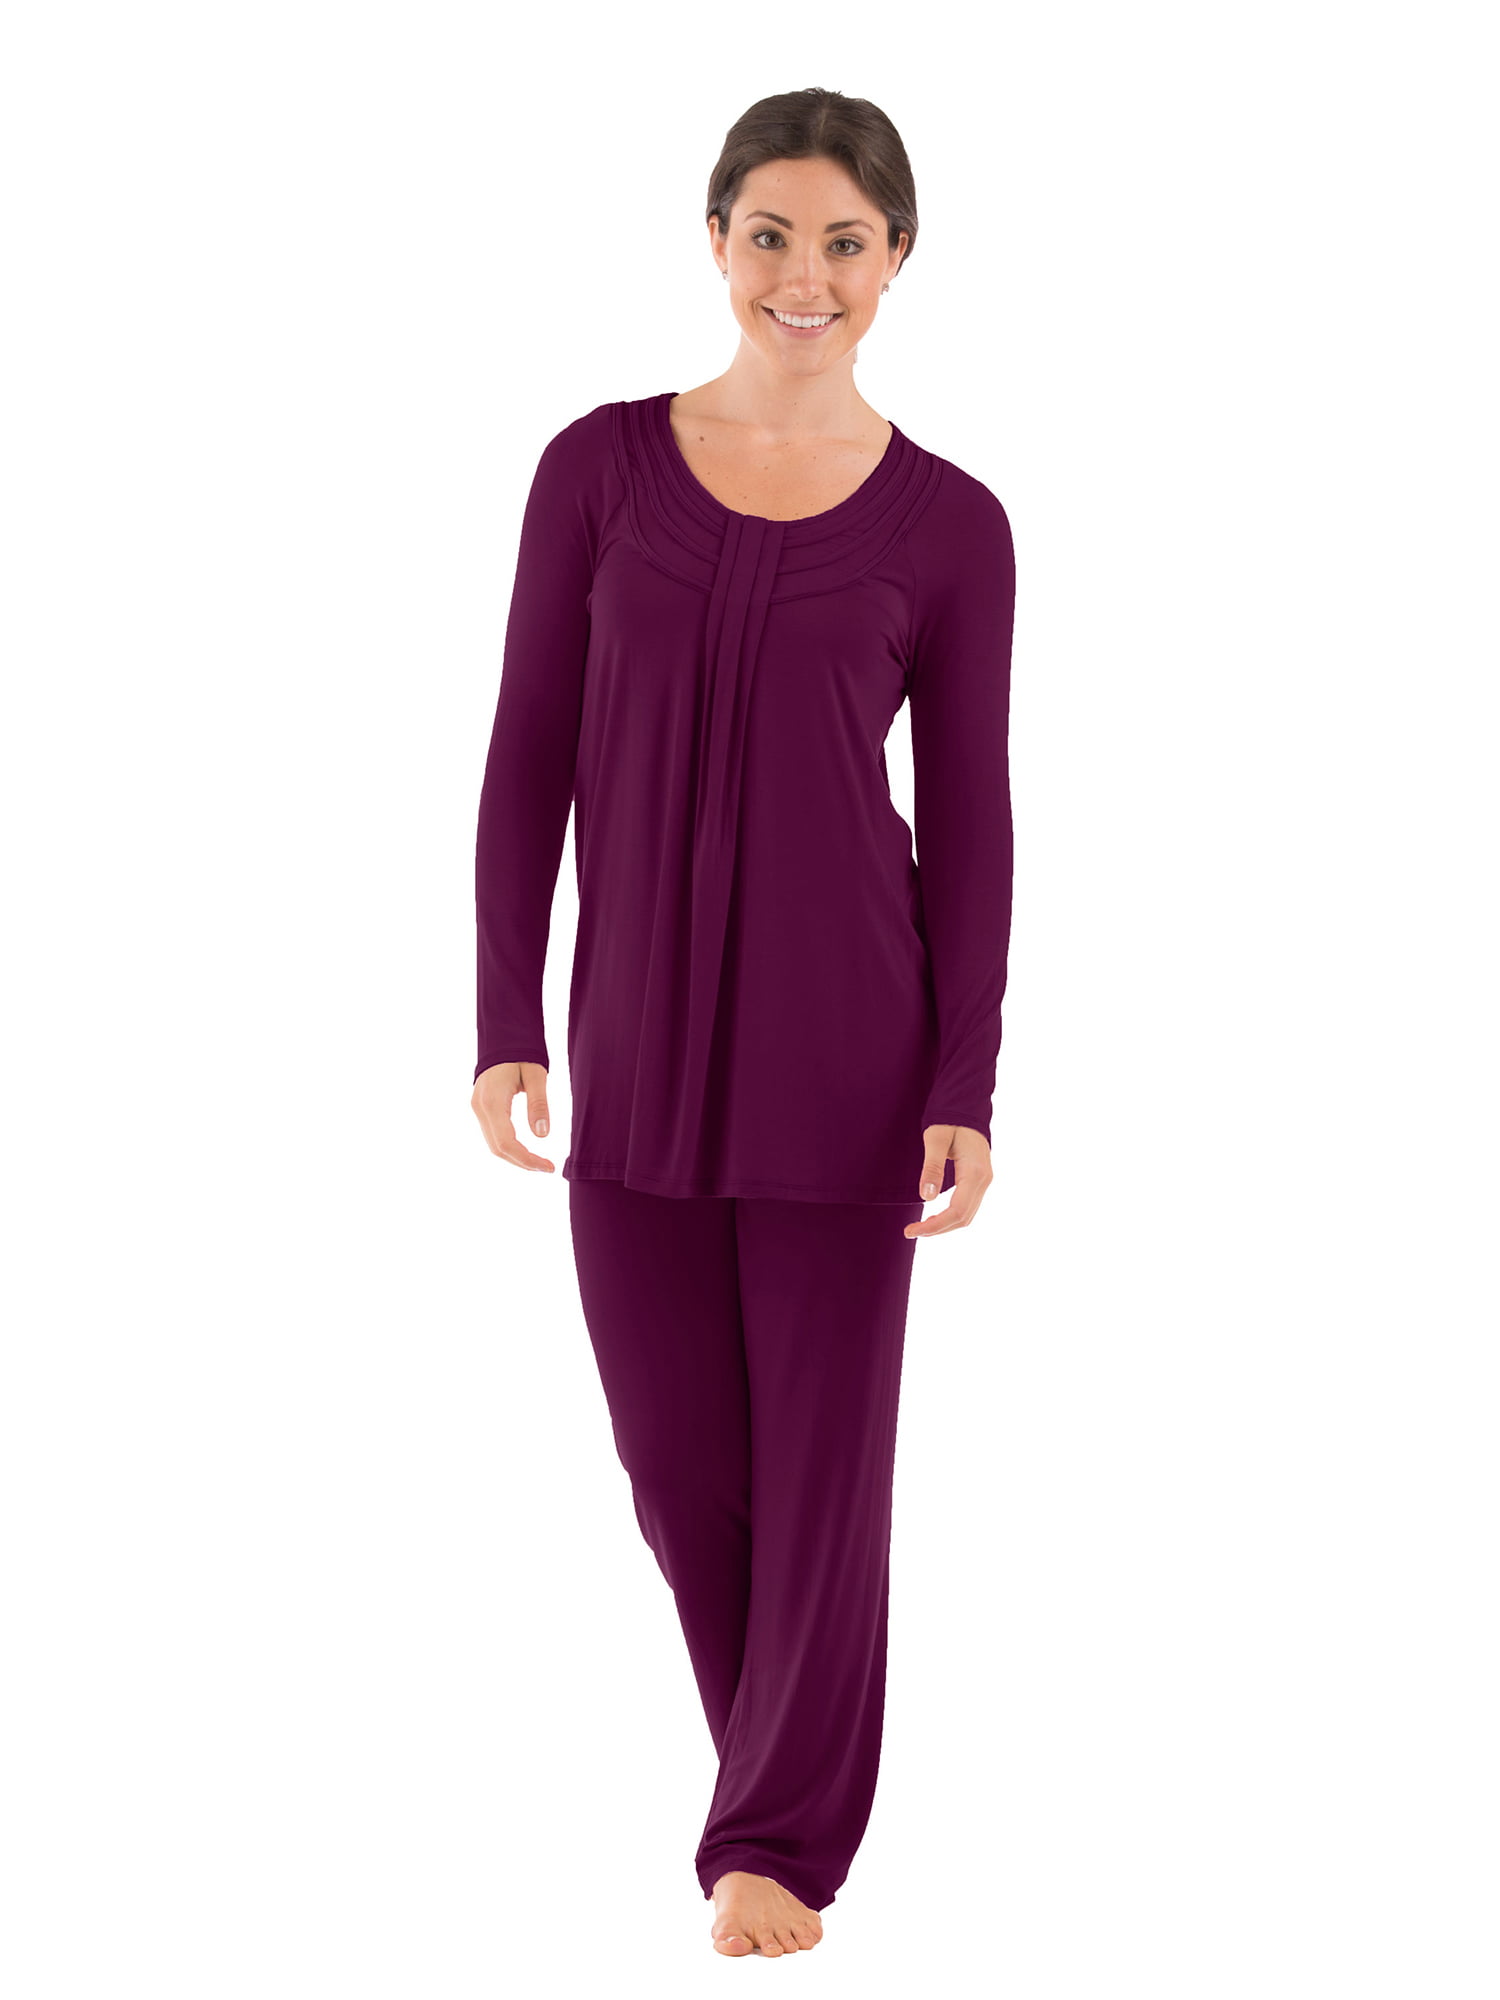 Women's Long Sleeve PJs in Bamboo Viscose (Replenish) Cozy Pajama Set ...